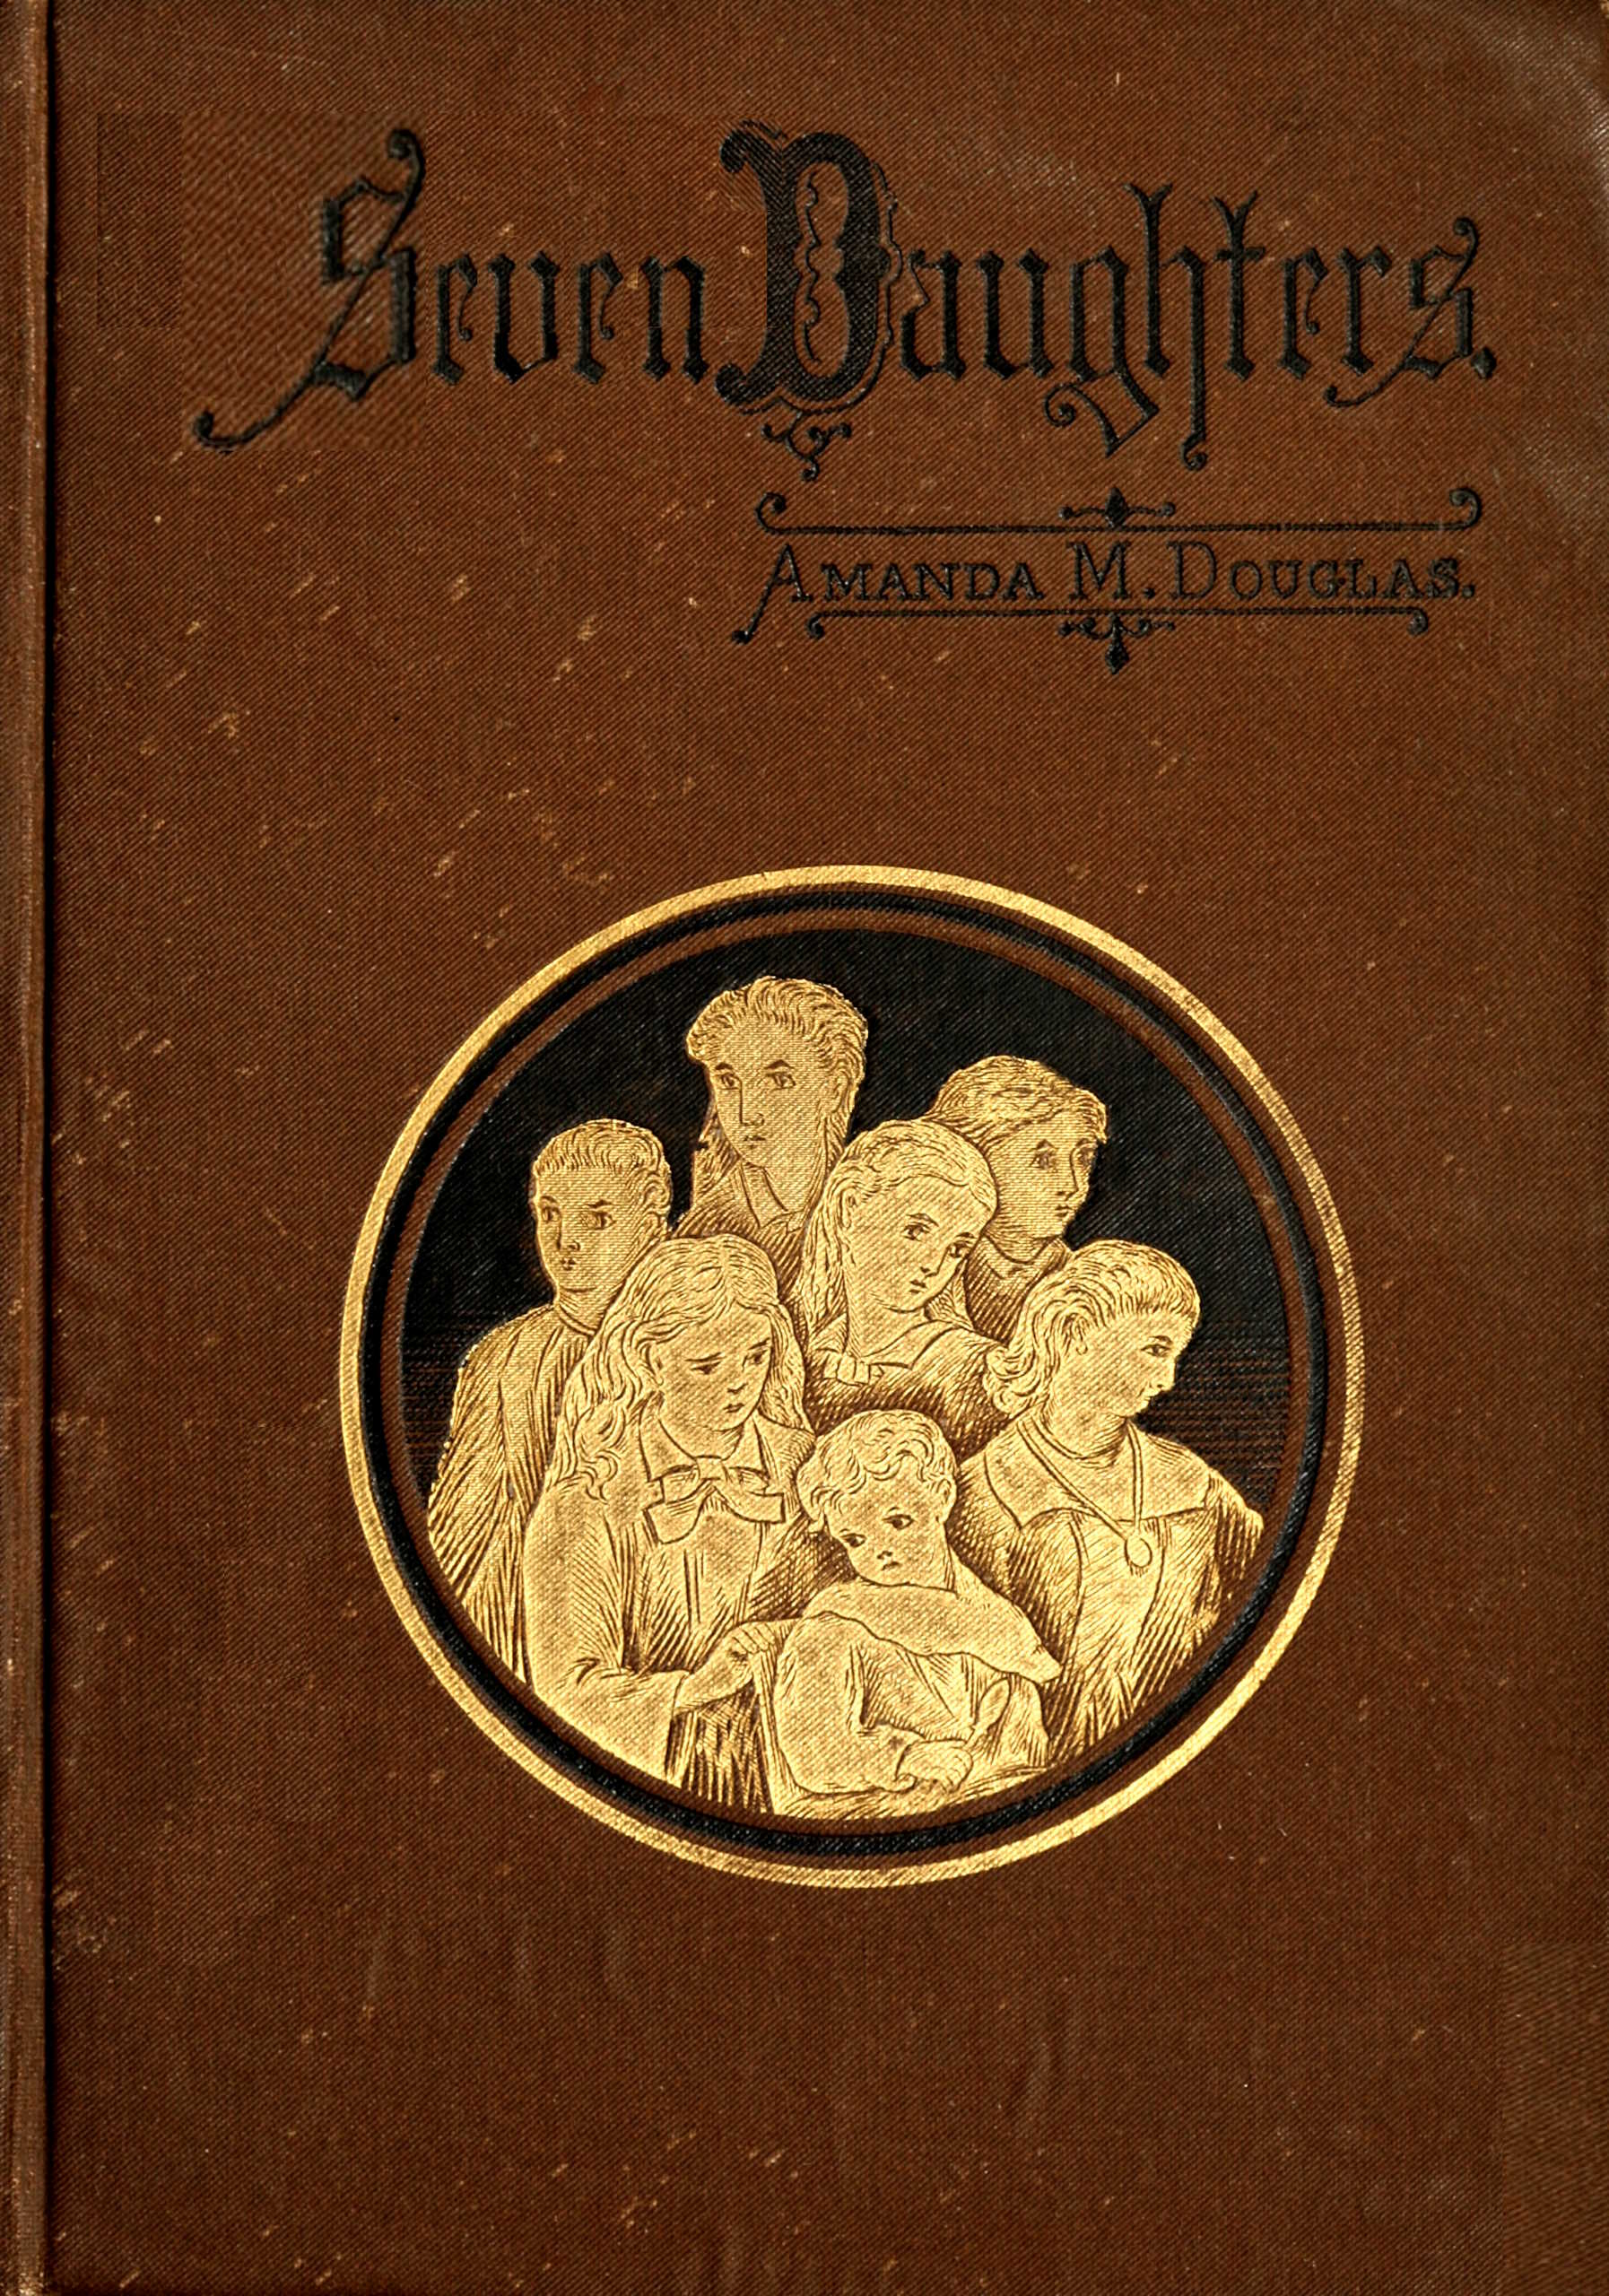 Seven Daughters   Project Gutenberg